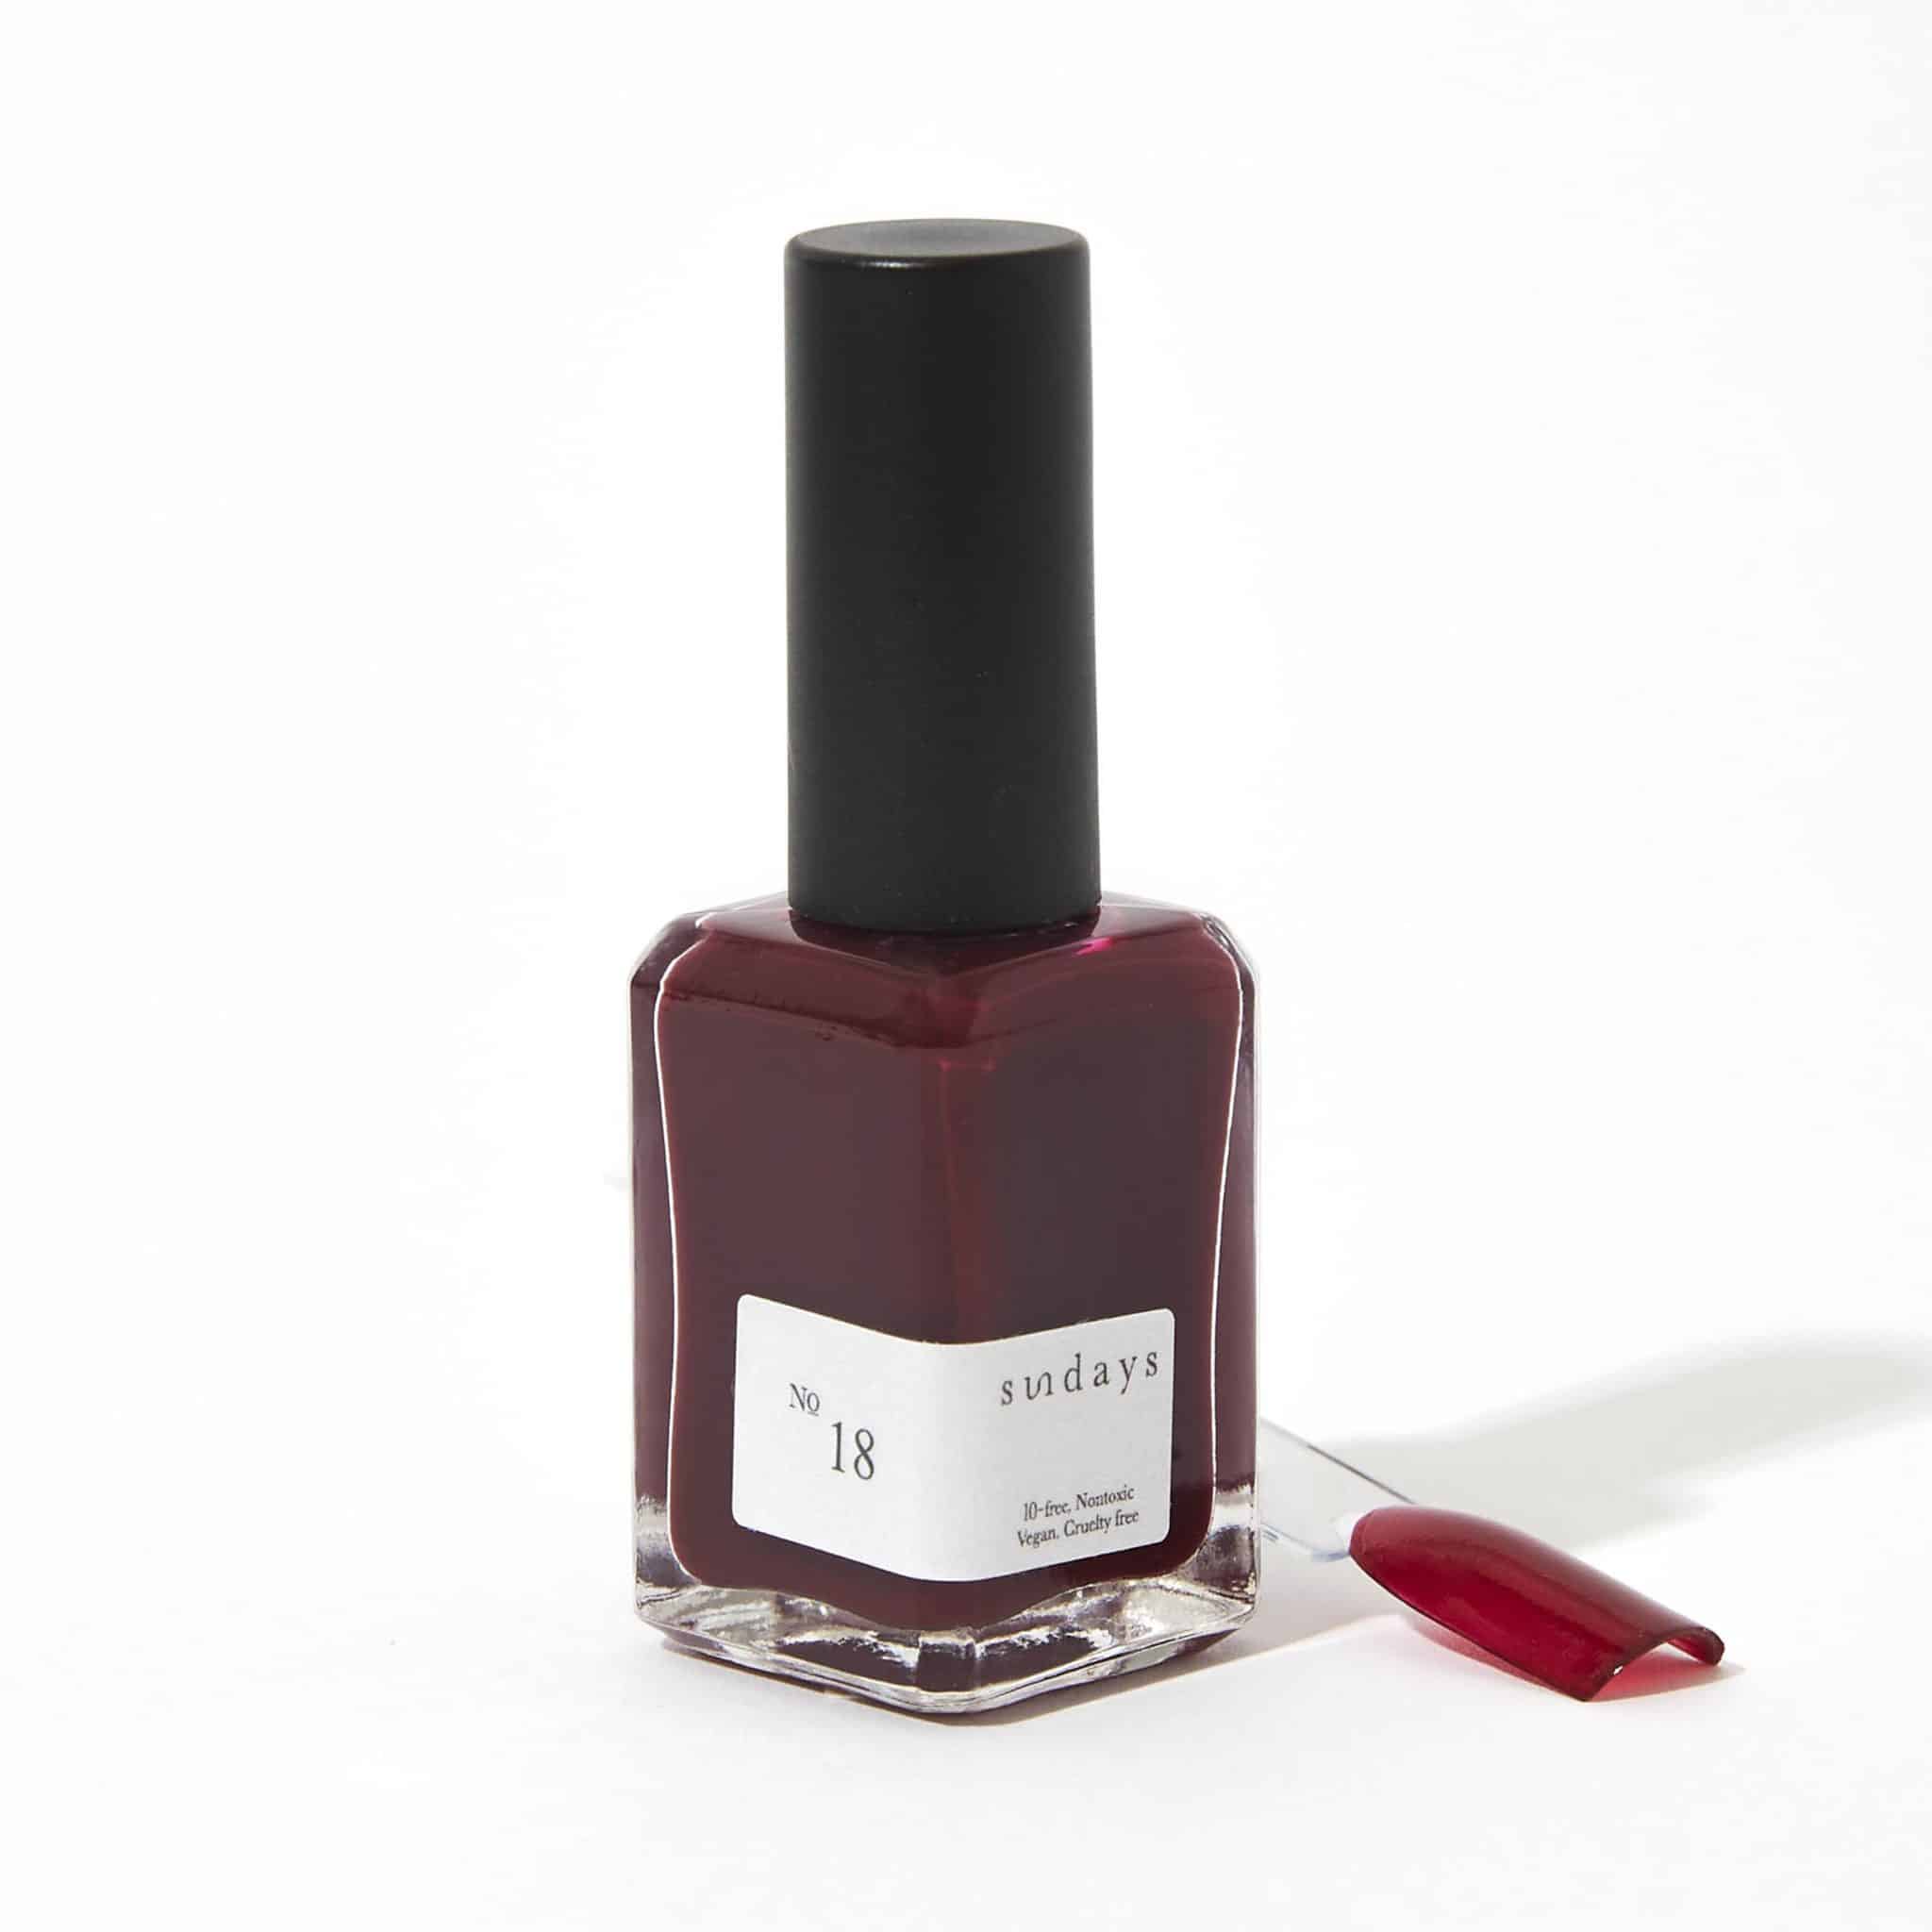 Non-toxic nail polish in dark red